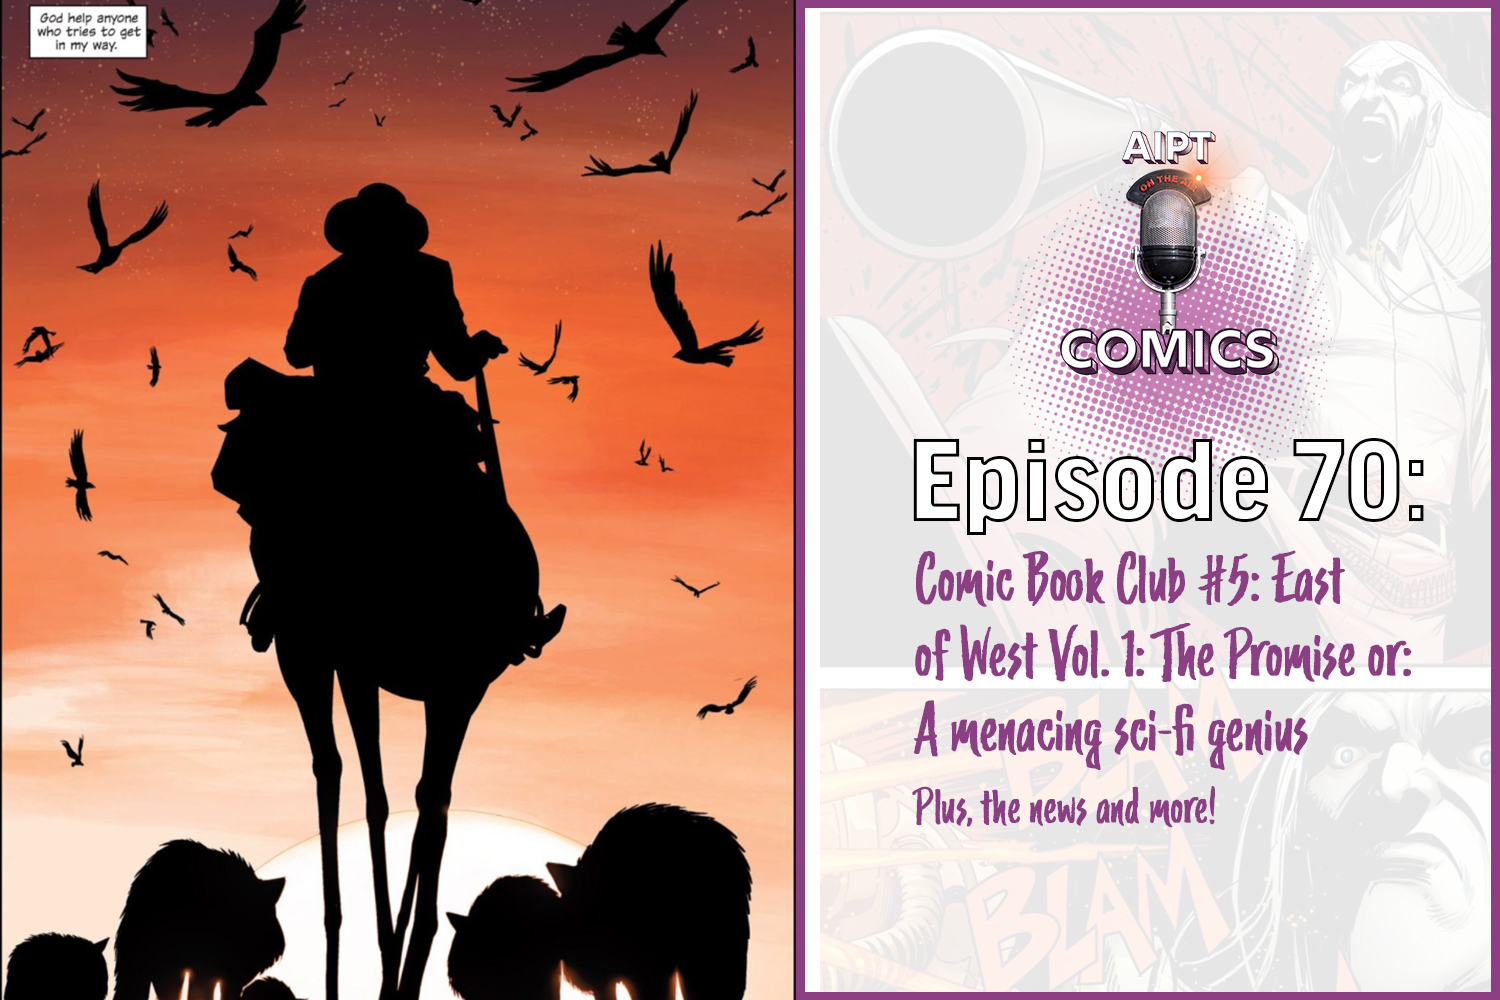 AIPT Comics Podcast episode 70: Comic book club #5 - East of West Vol. 1 The Promise or: Menacing sci-fi genius